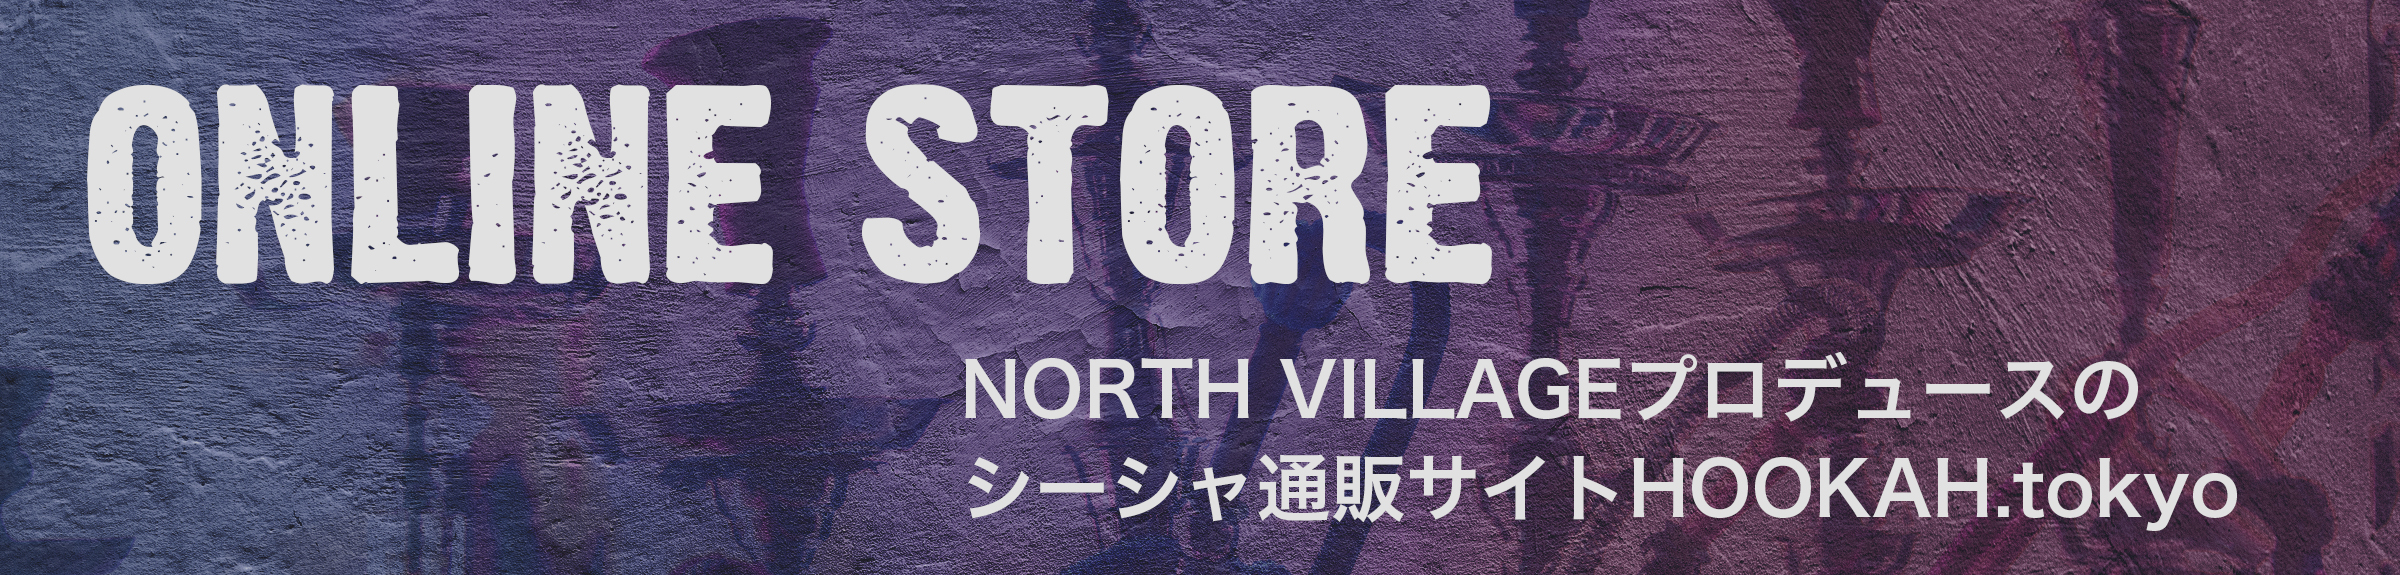 ONLINE STORE NORTH VILLAGEプロデュースのシーシャ通販サイト HOOKAH.tokyo